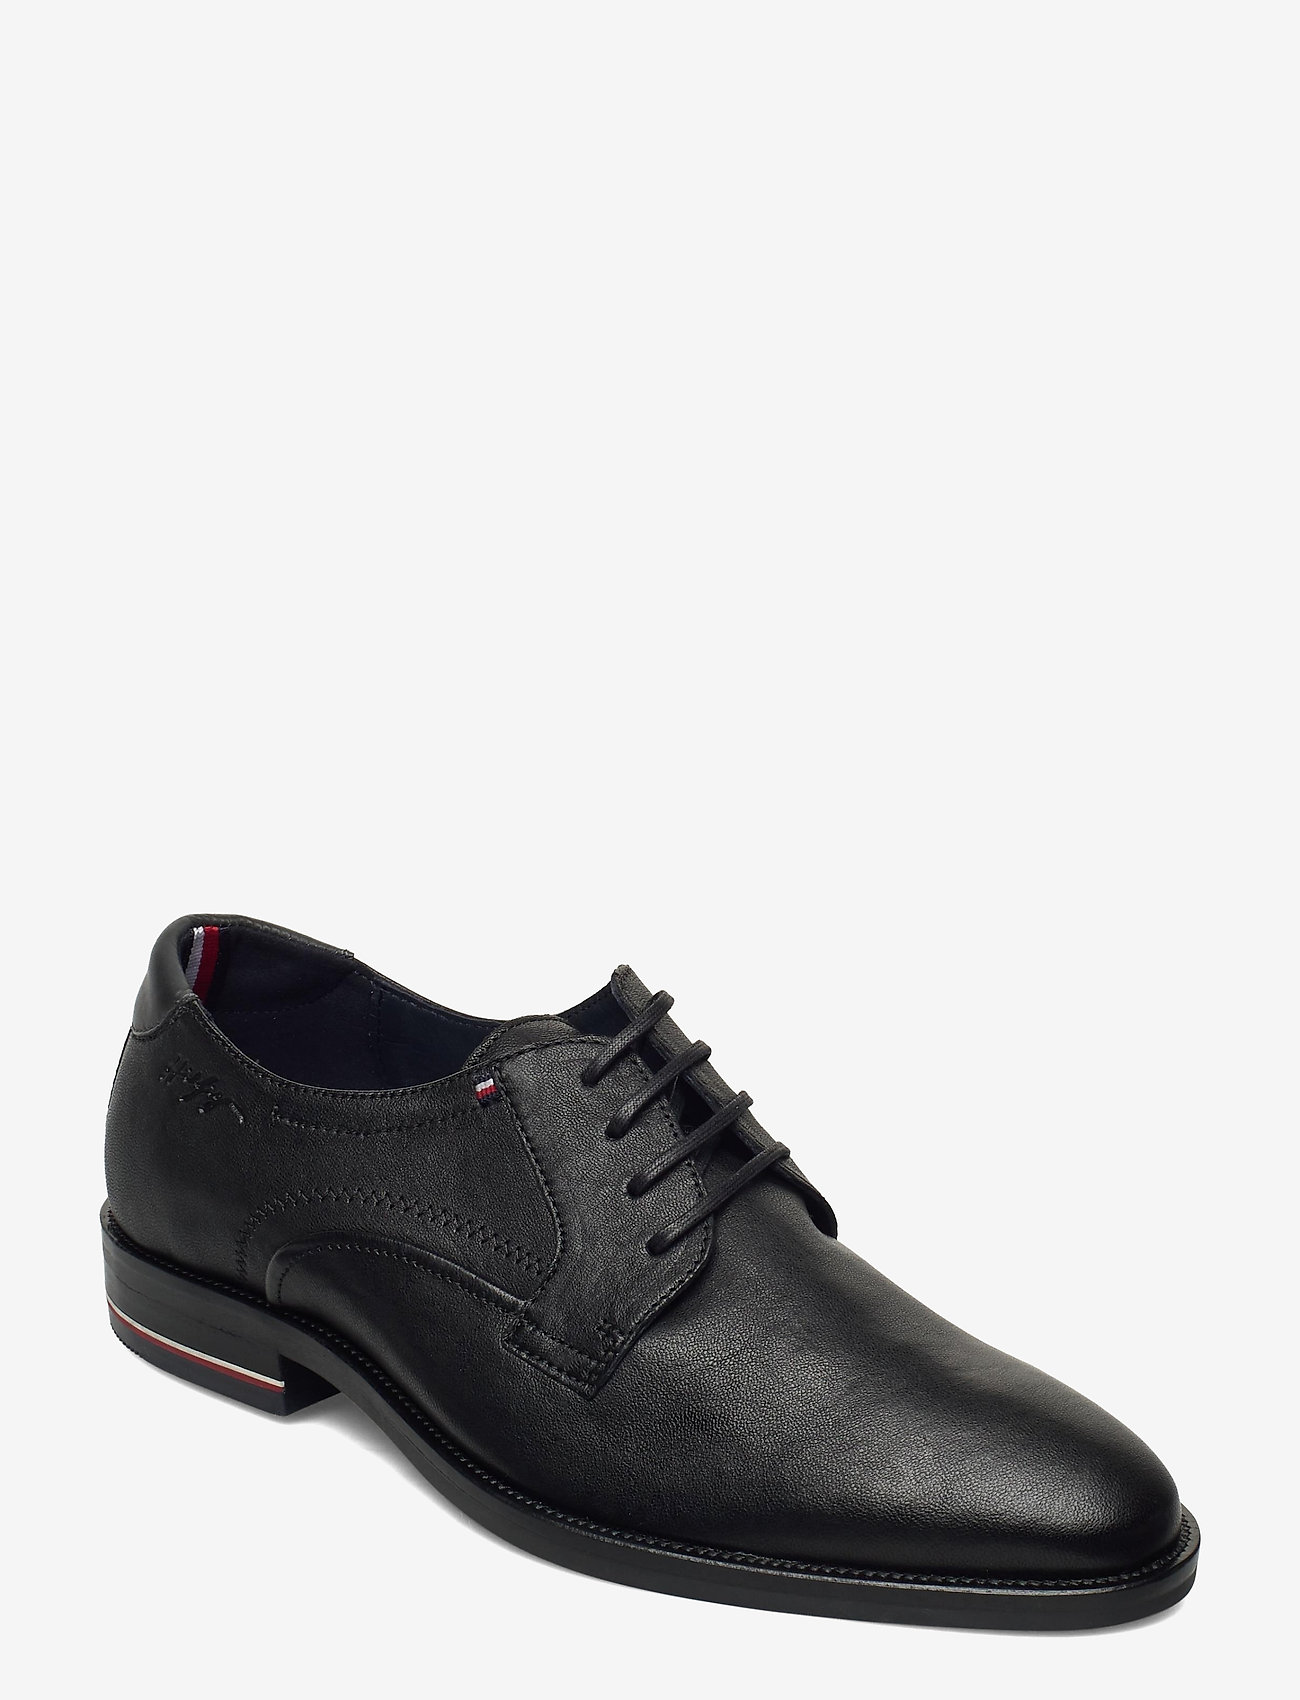 Signature Hilfiger Leather Shoe (Black 